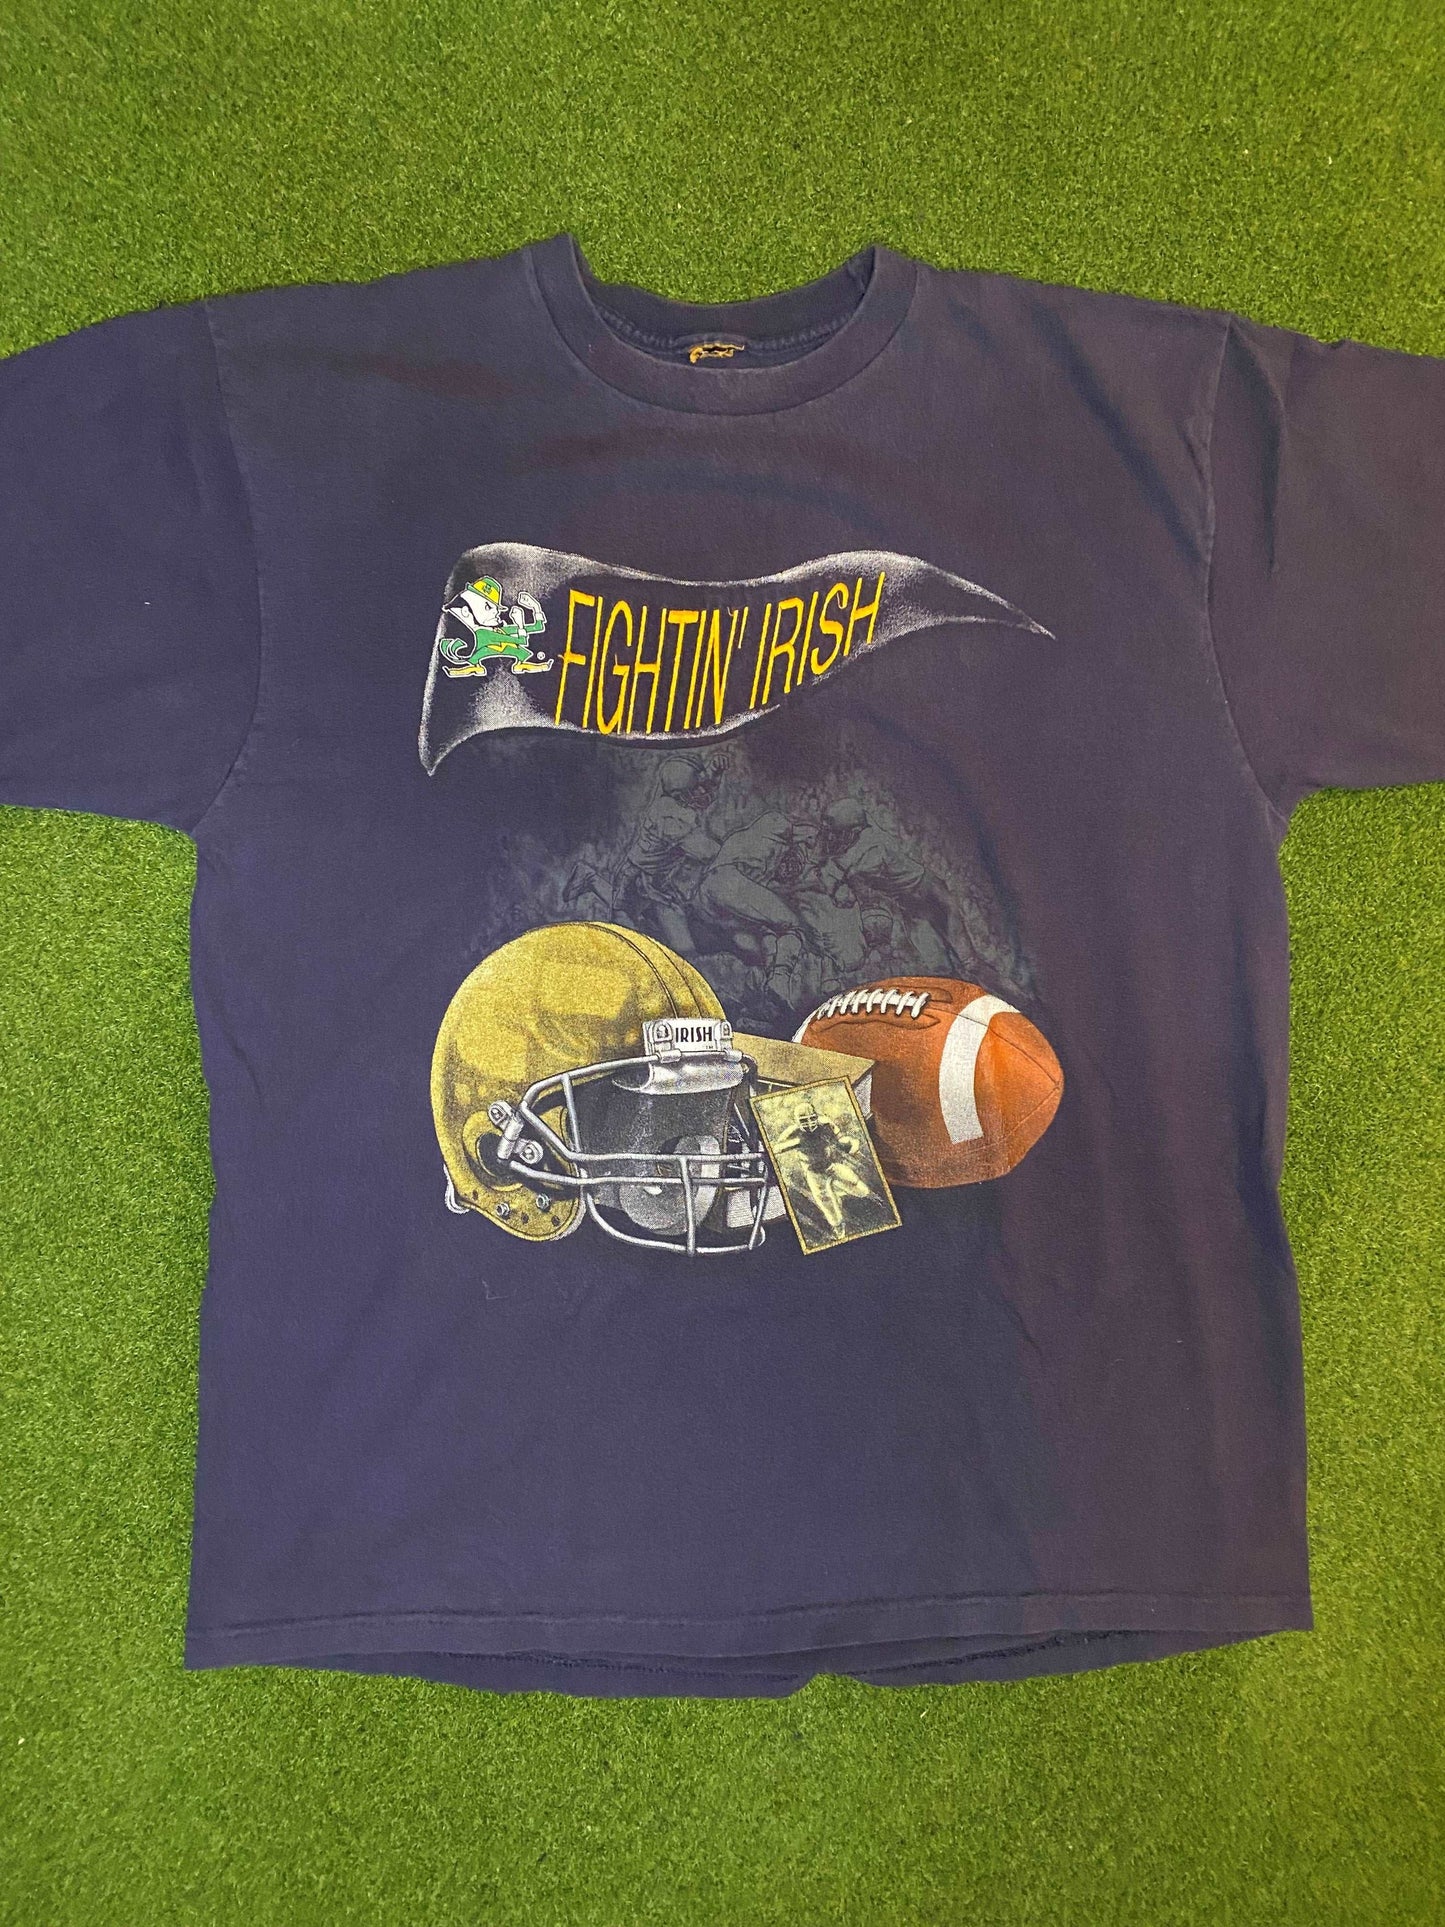 90s Notre Dame Fighting Irish - Vintage College Football Tee Shirt (XL)